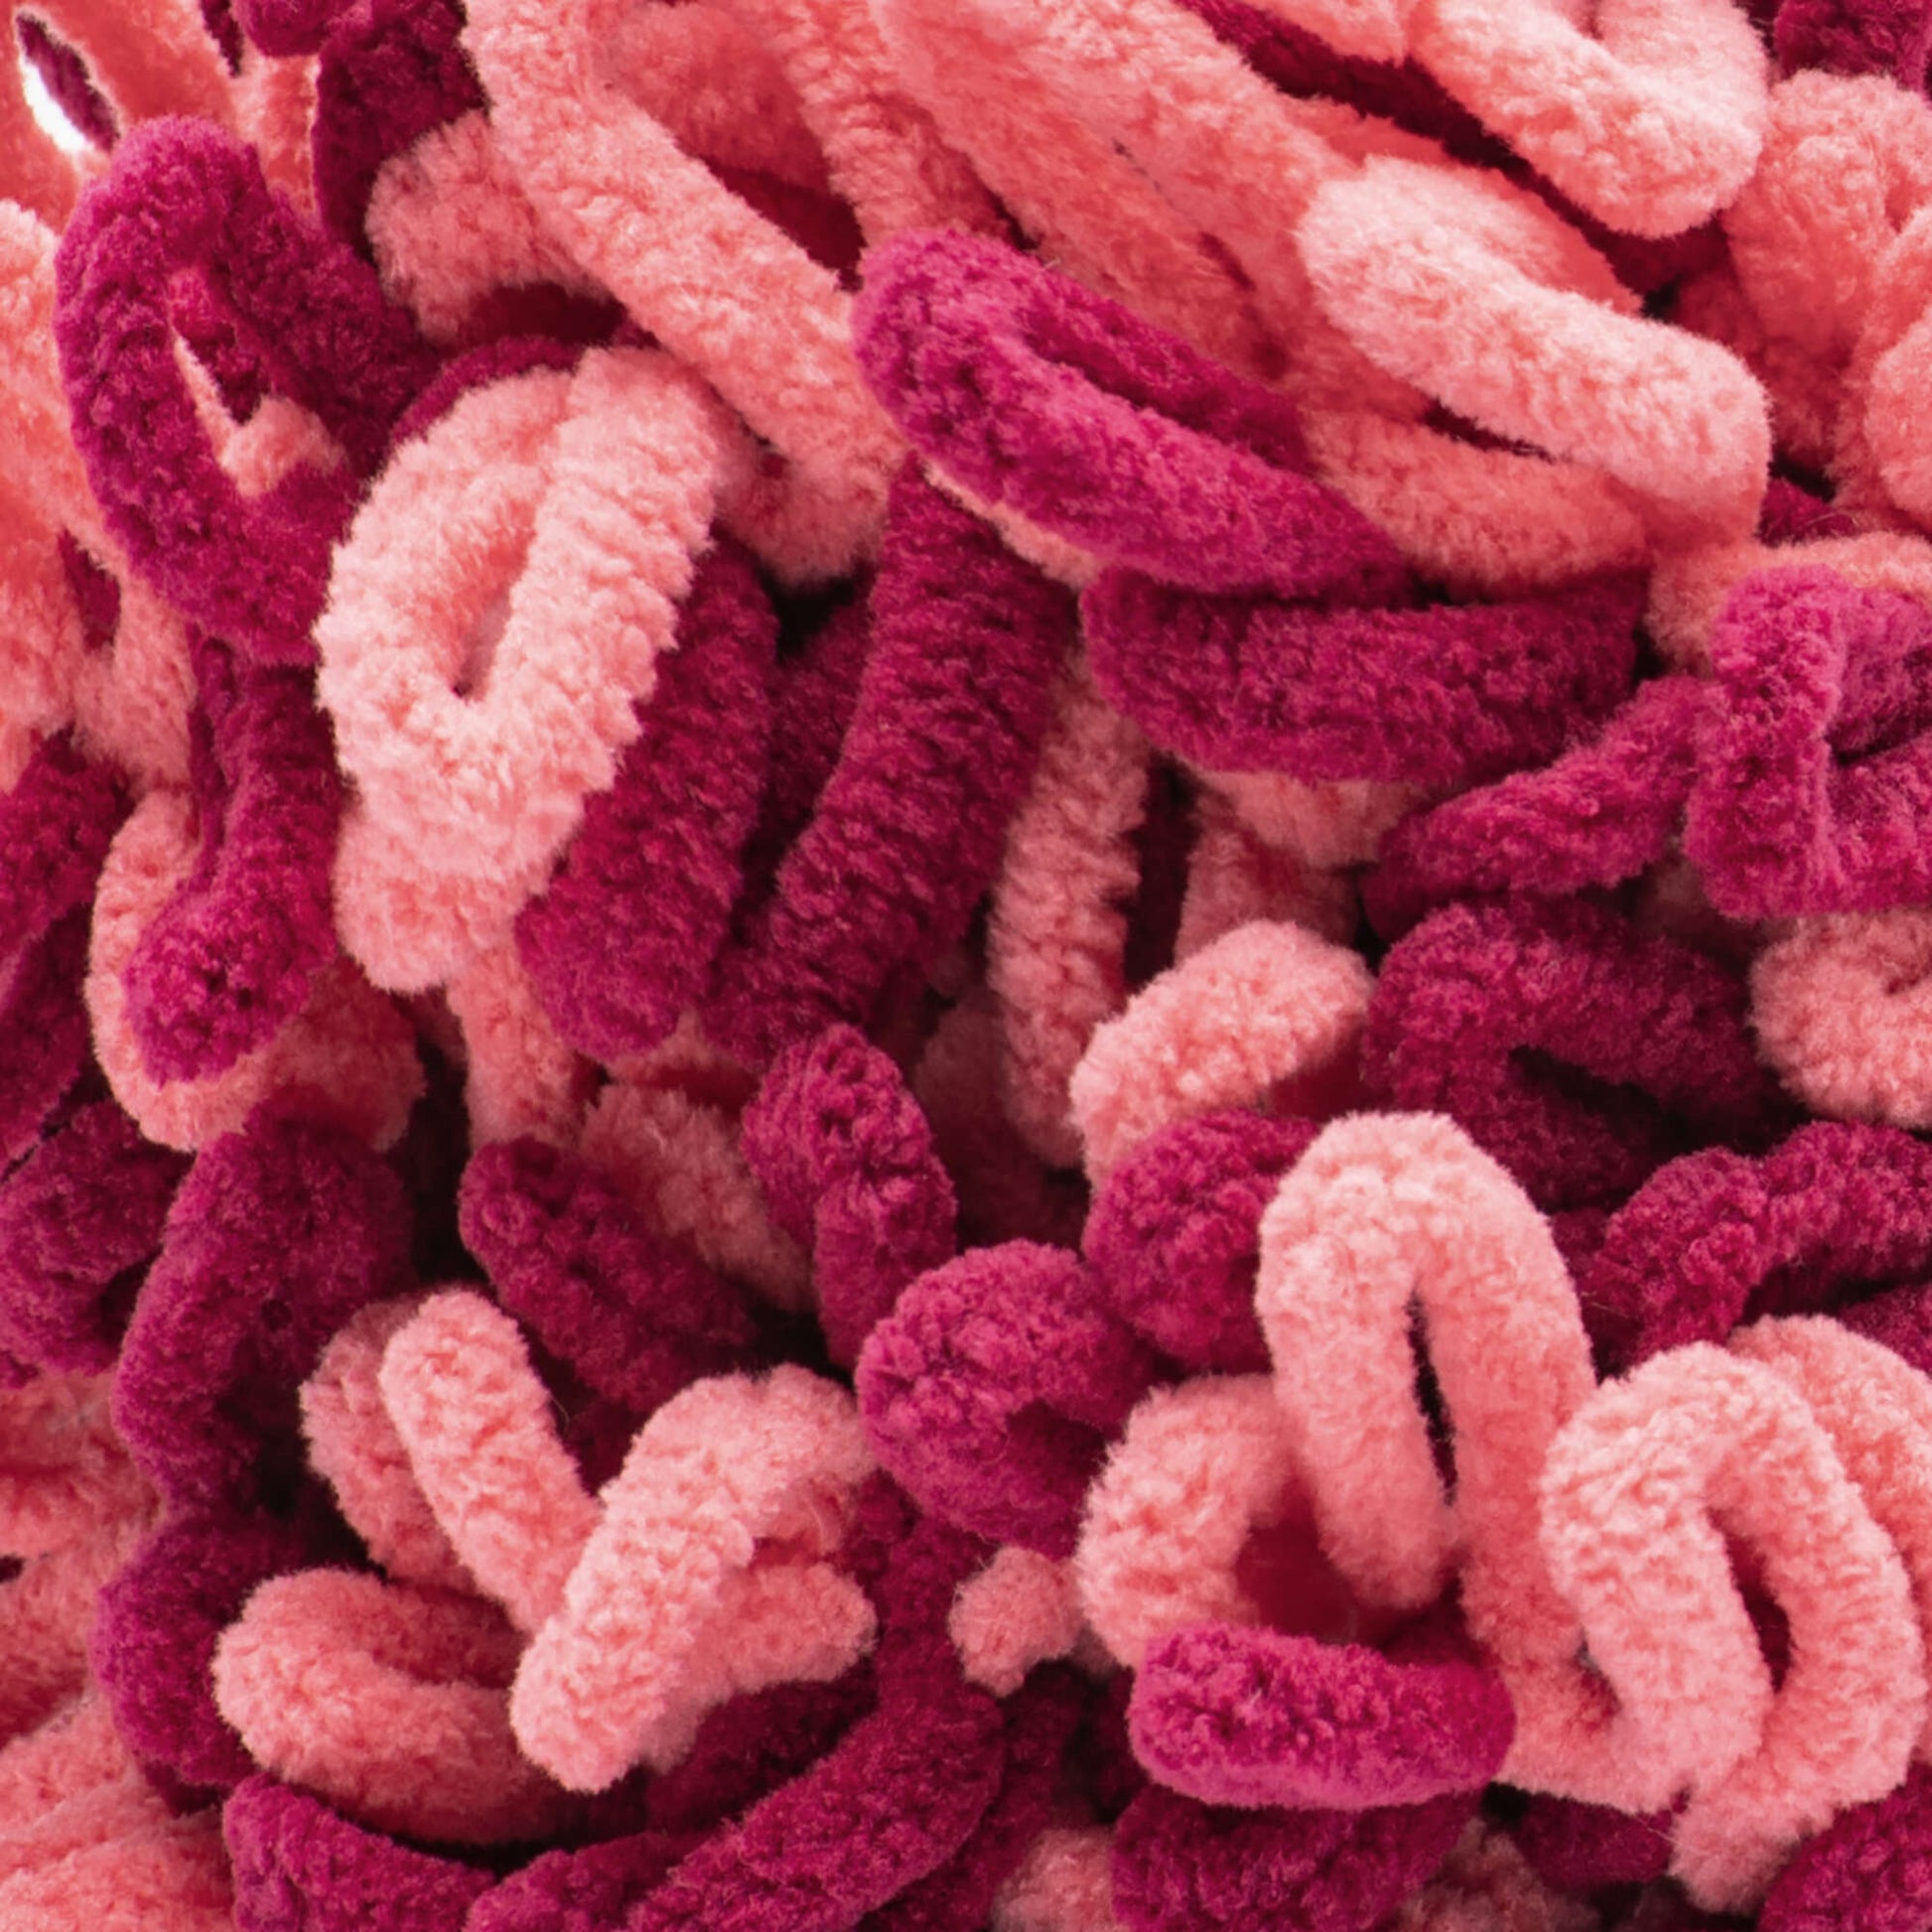 Bernat Alize Blanket-EZ Graph It Yarn - Discontinued Shades Cerise Coral Pink